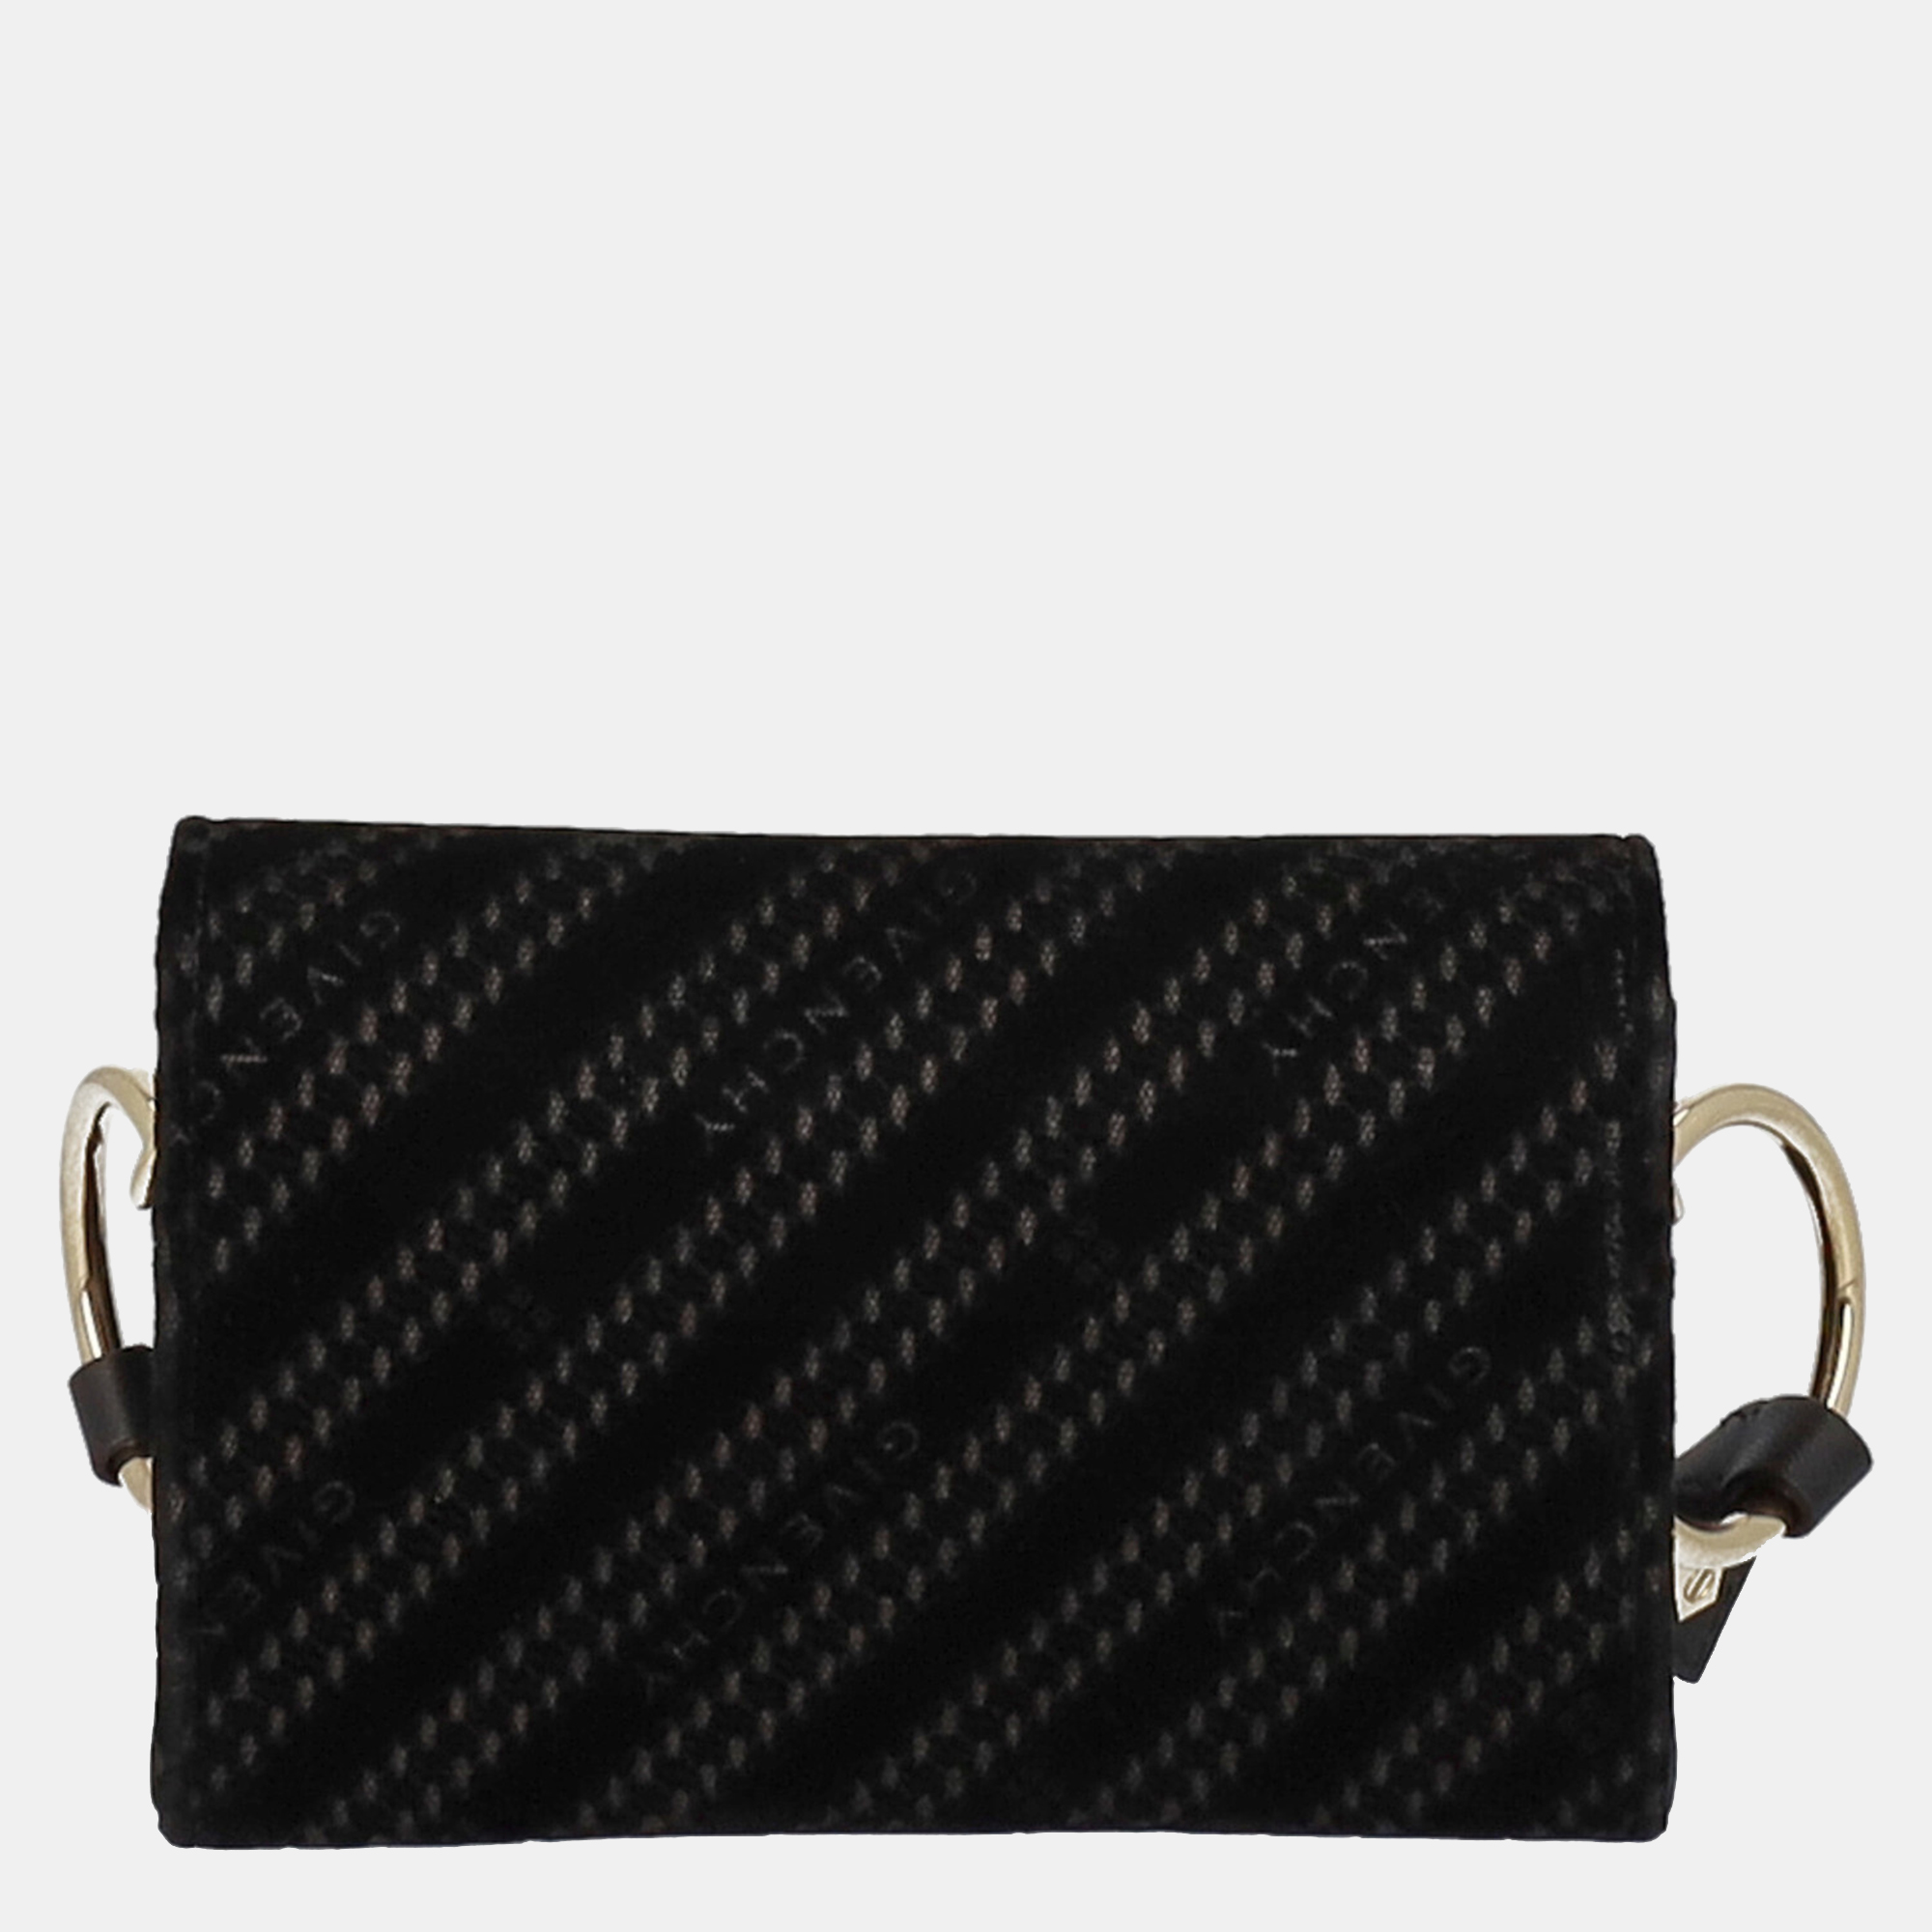 Givenchy  Women's Fabric Belt Bag - Black - One Size